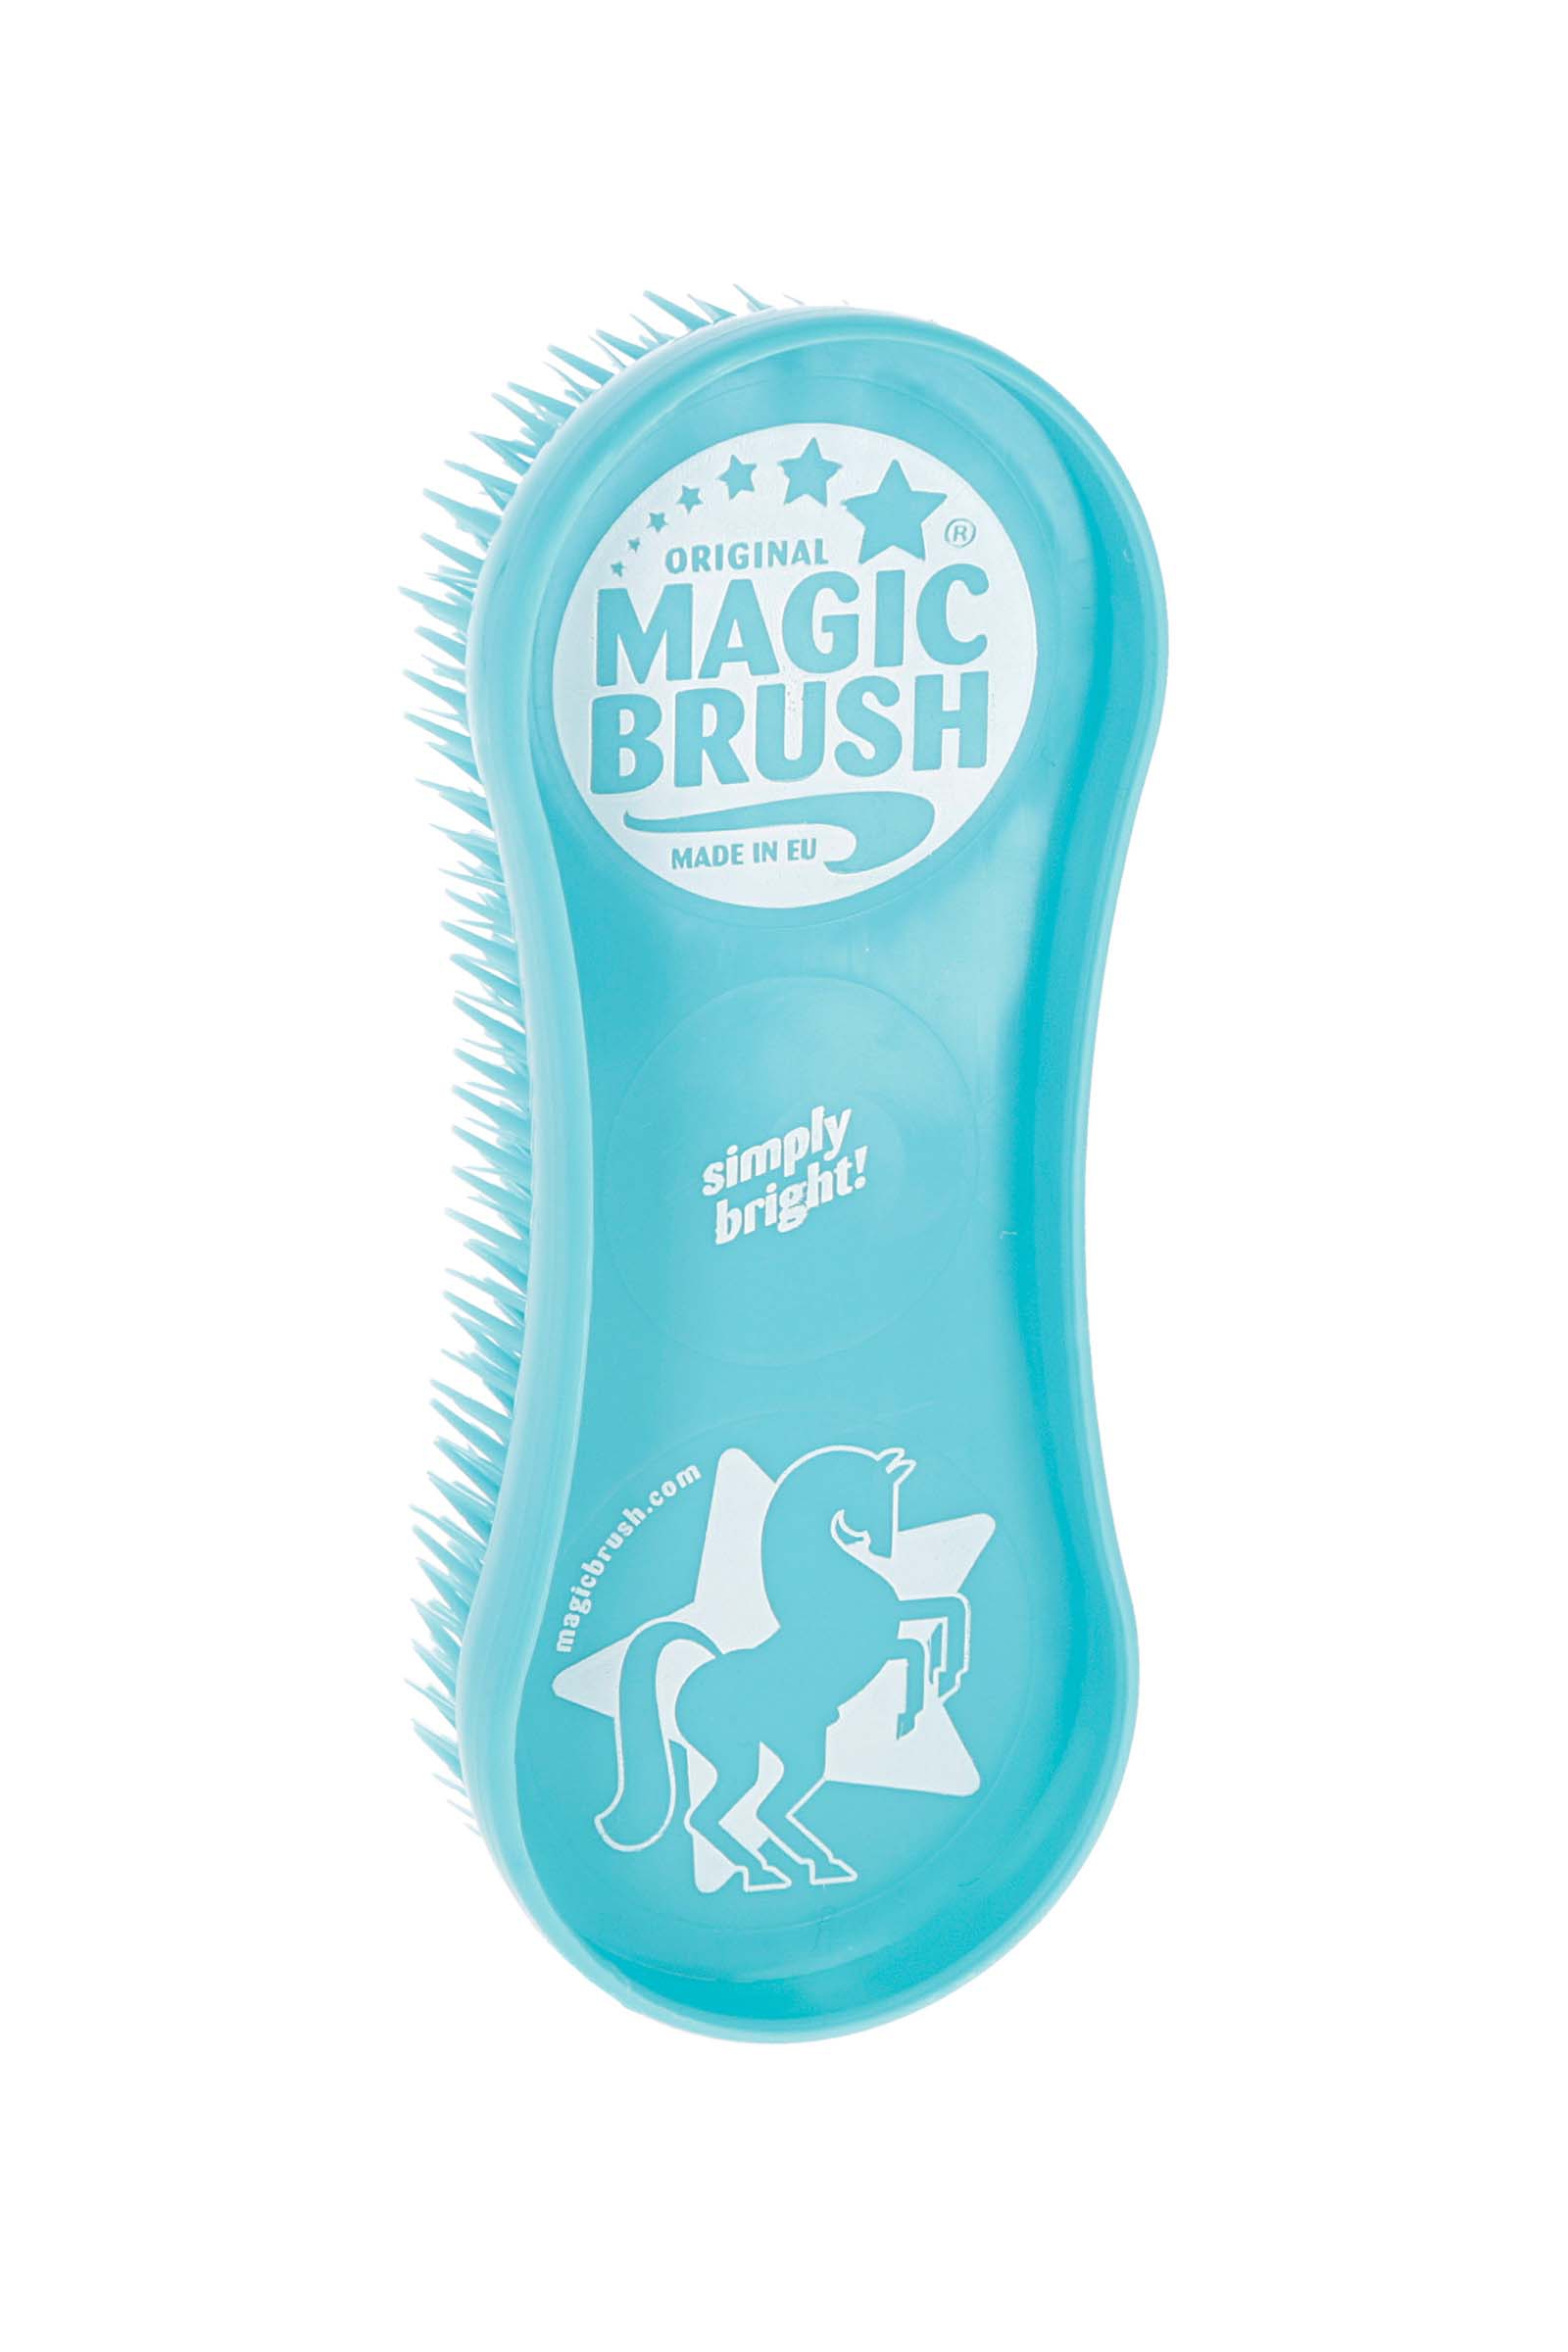 horse : : Brush Blaster : : magic brush cleaner—It's THE BOMB